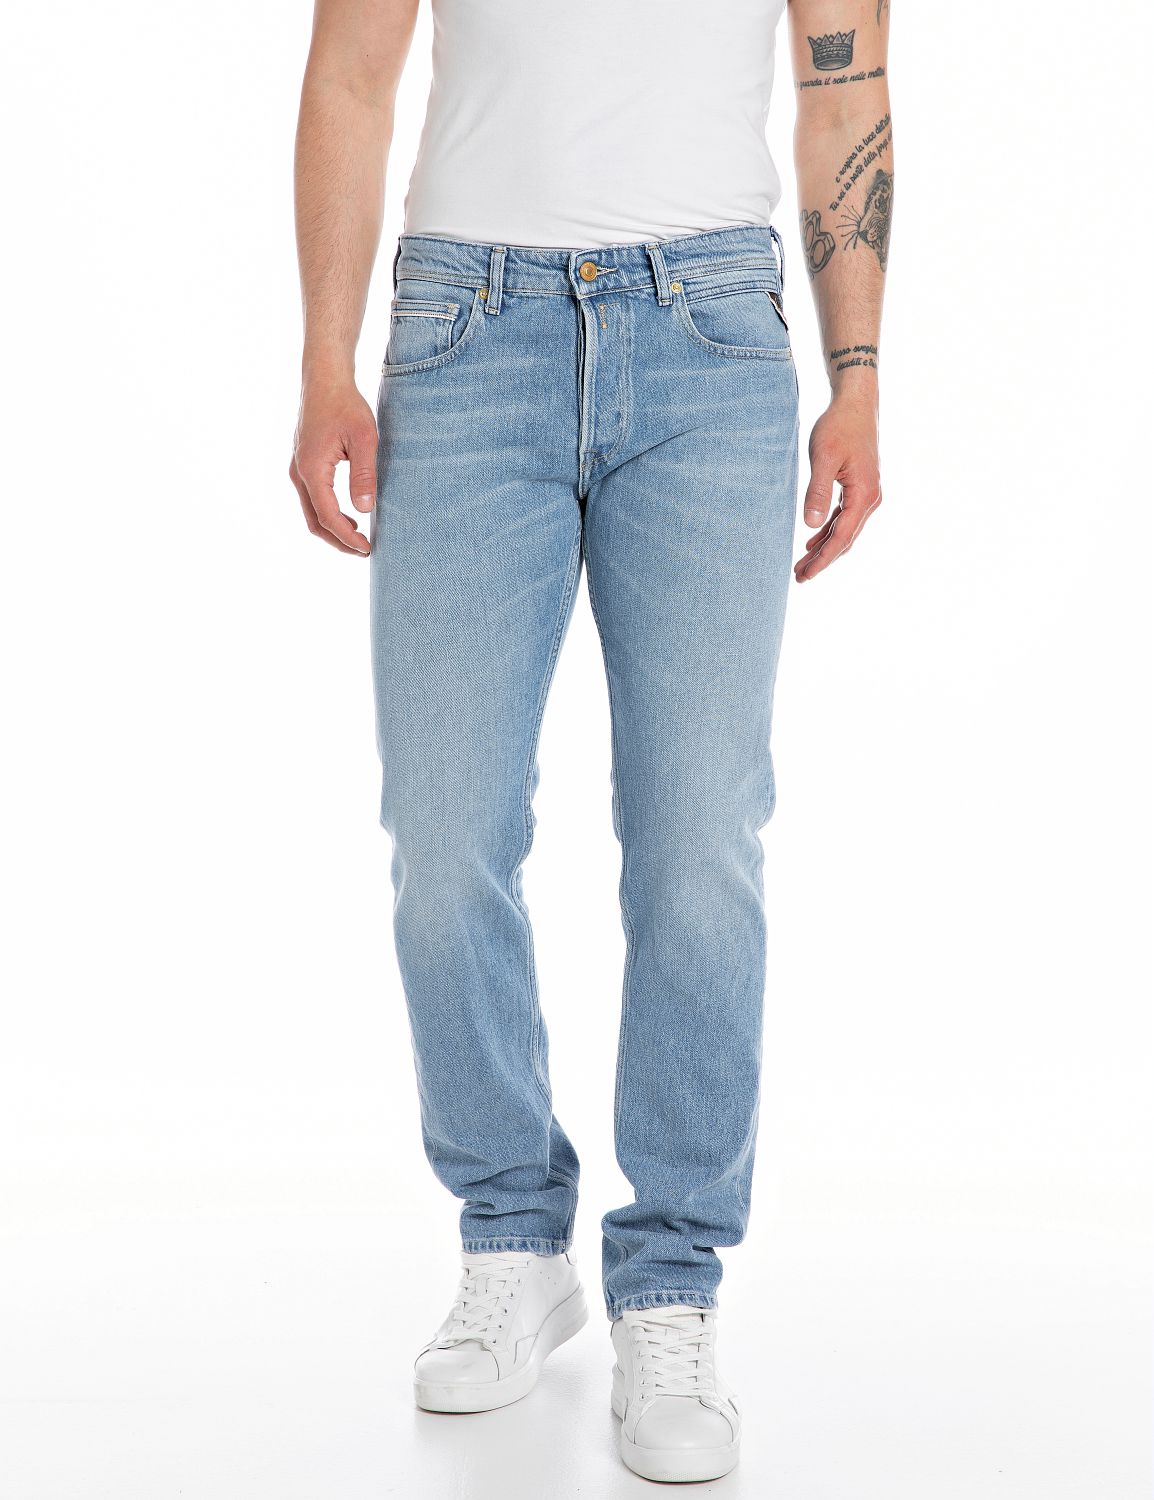 Jeans REPLAY MA972P.030.737 606 - Denim